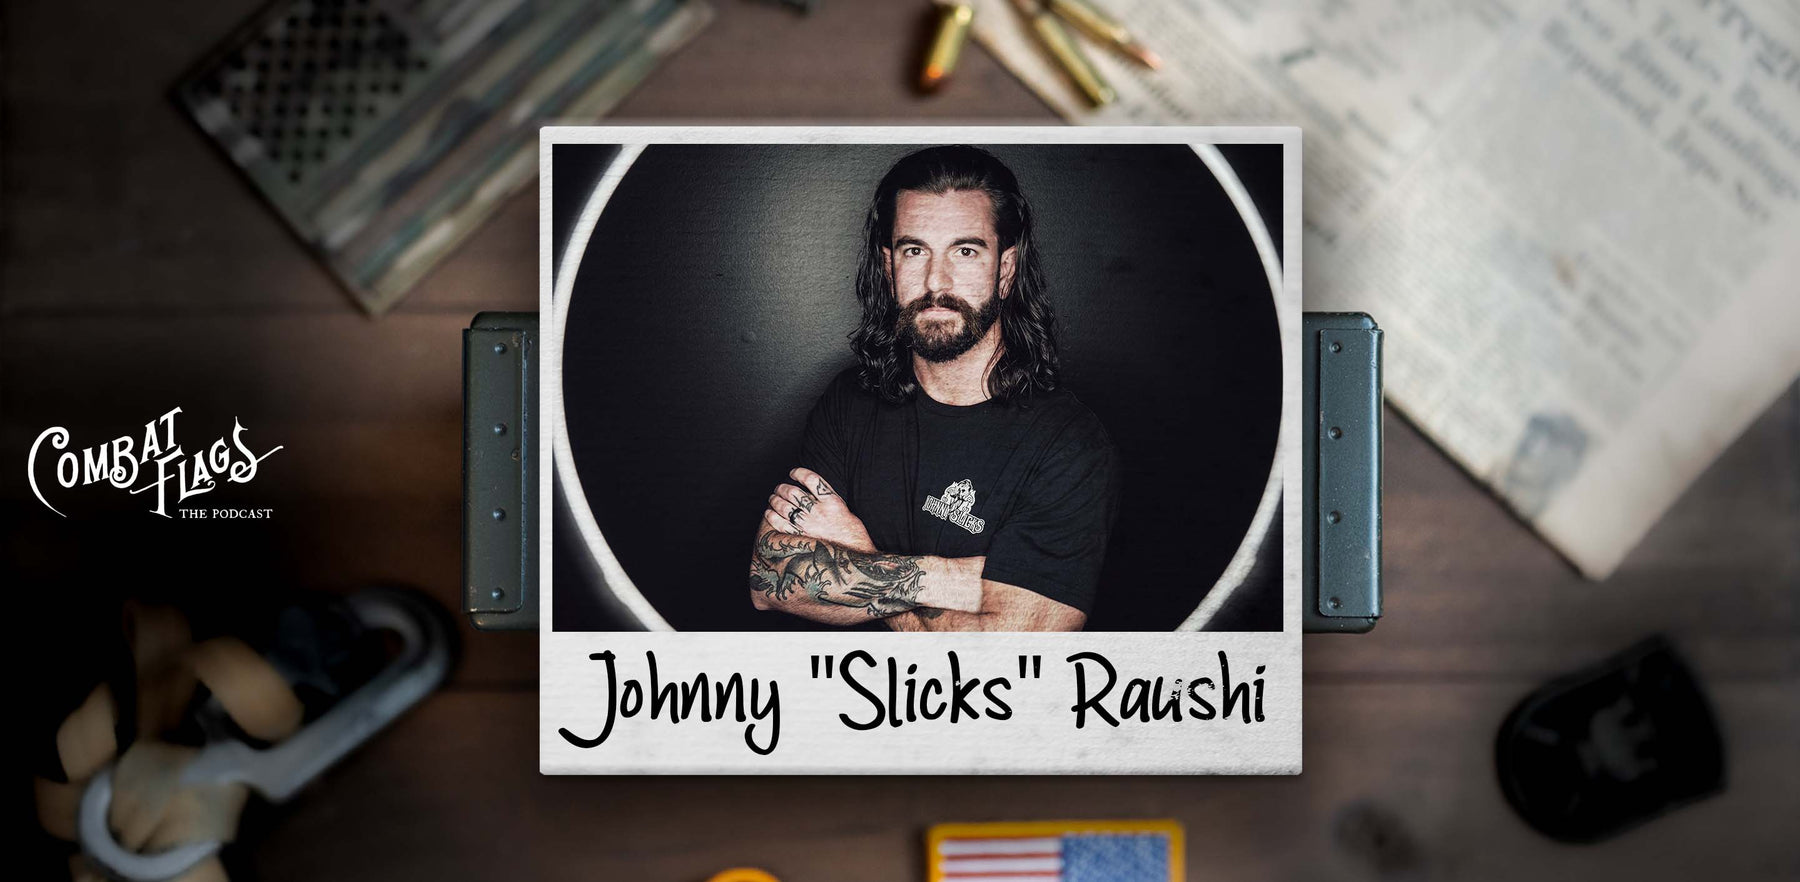 024: Johnny Slicks Raushi